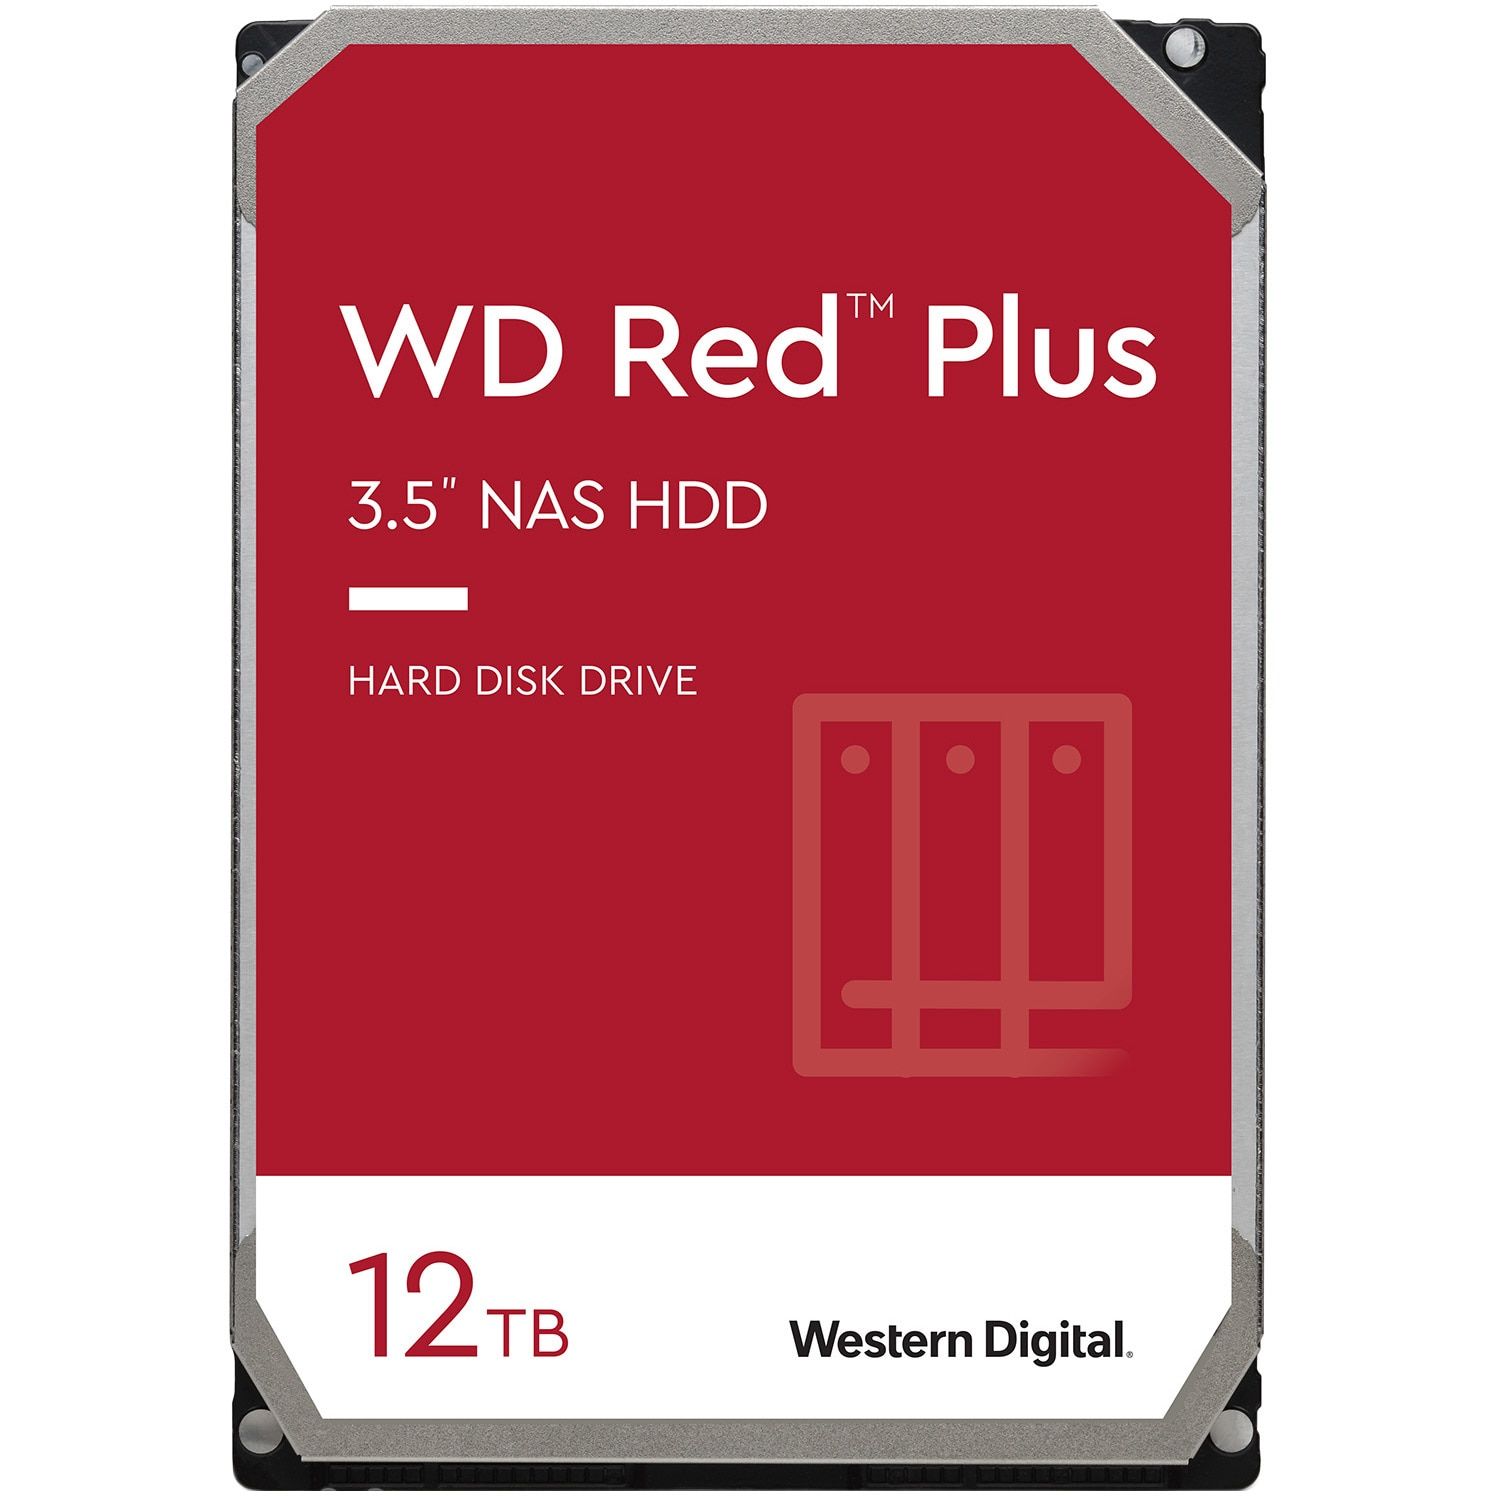 Western Digital WD Red Plus 3.5